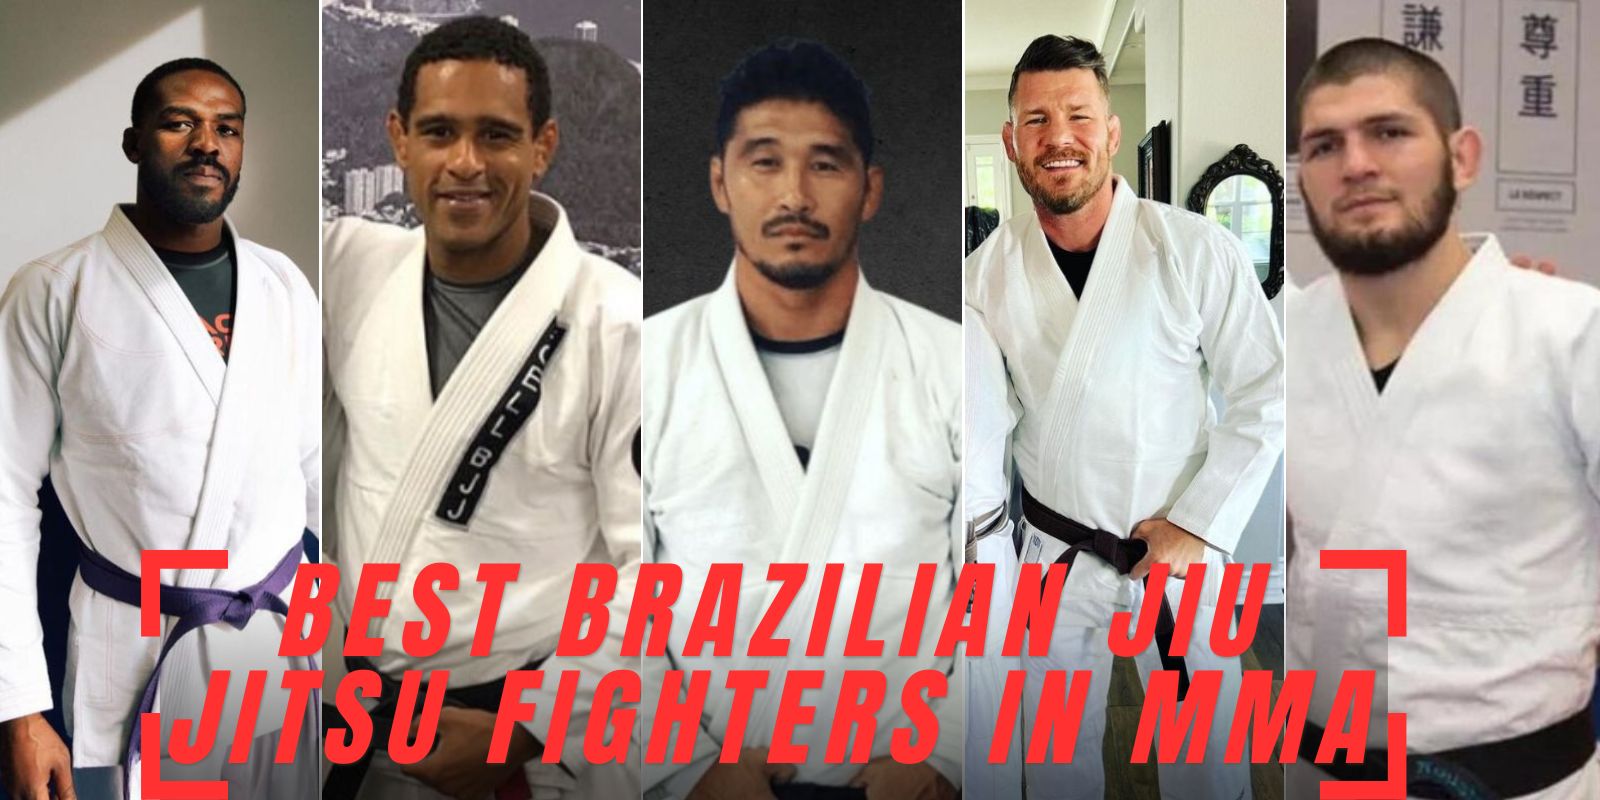 best brazilian jiu jitsu fighter in mma